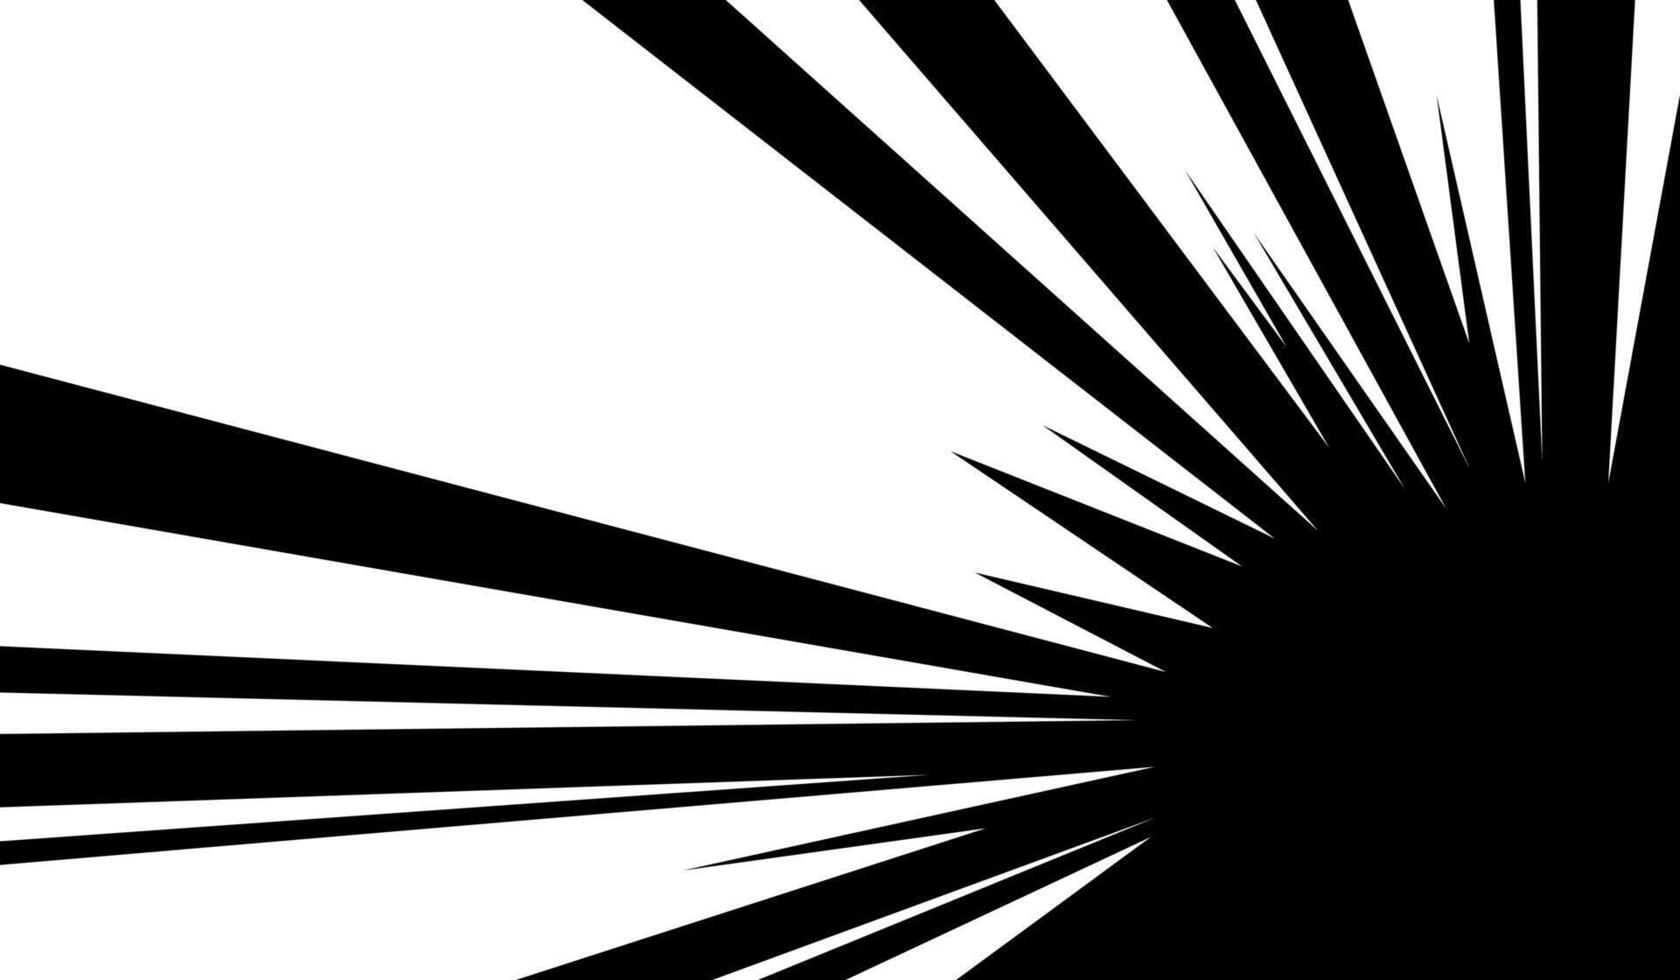 velocidad línea efecto manga cómic vector antecedentes elemento. dibujos animados ilustración de radial explosión movimienot. adecuado para libro, revista, póster, obra de arte